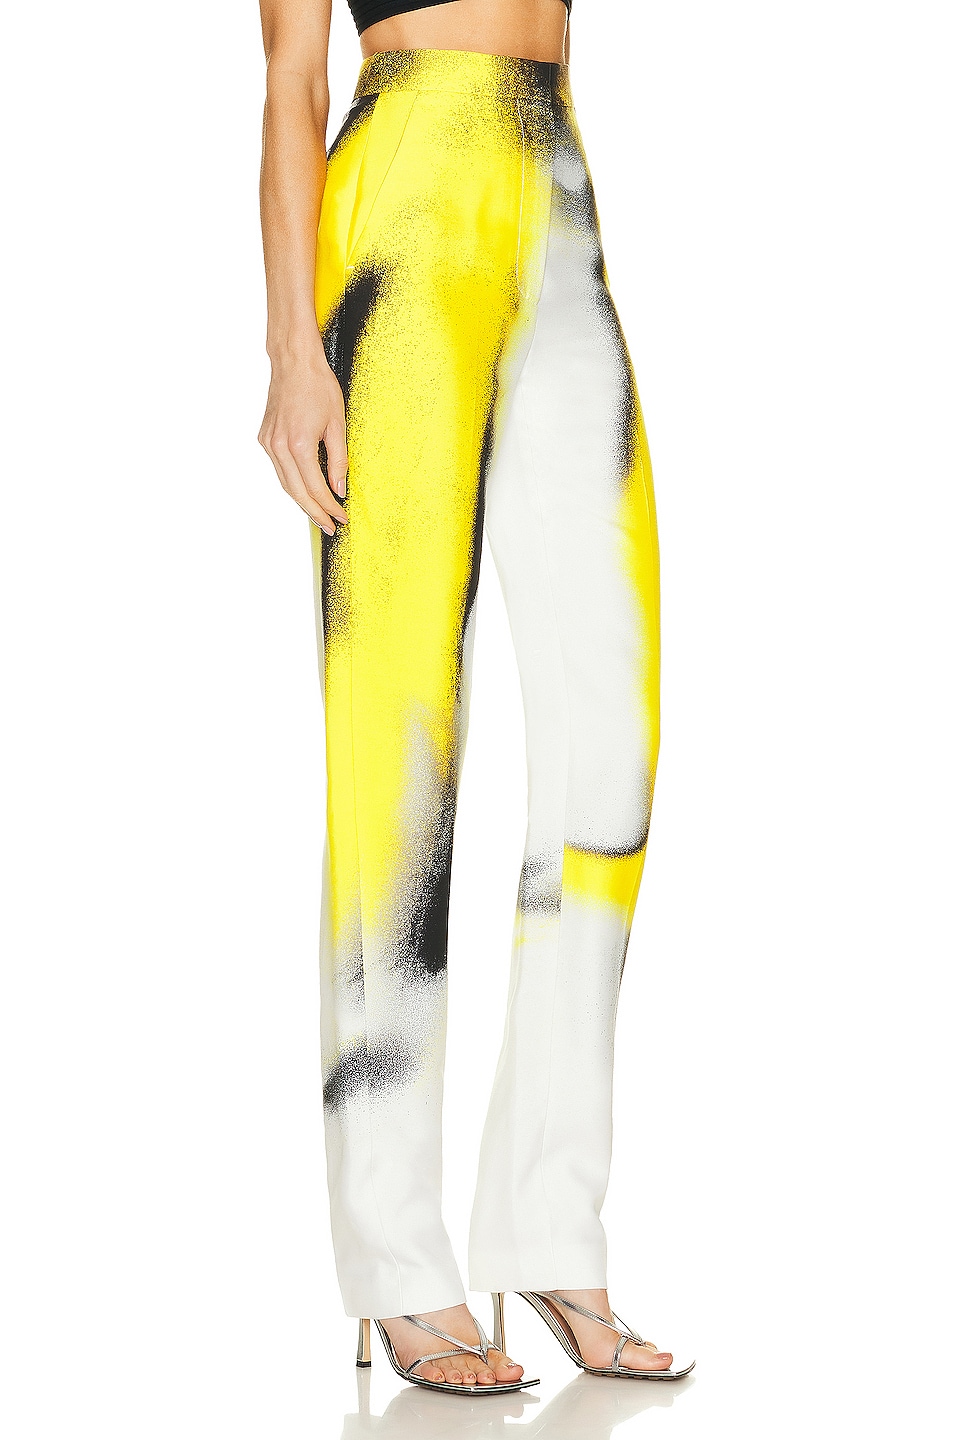 Alexander McQueen High Waisted Trouser in White & Acid Yellow | FWRD